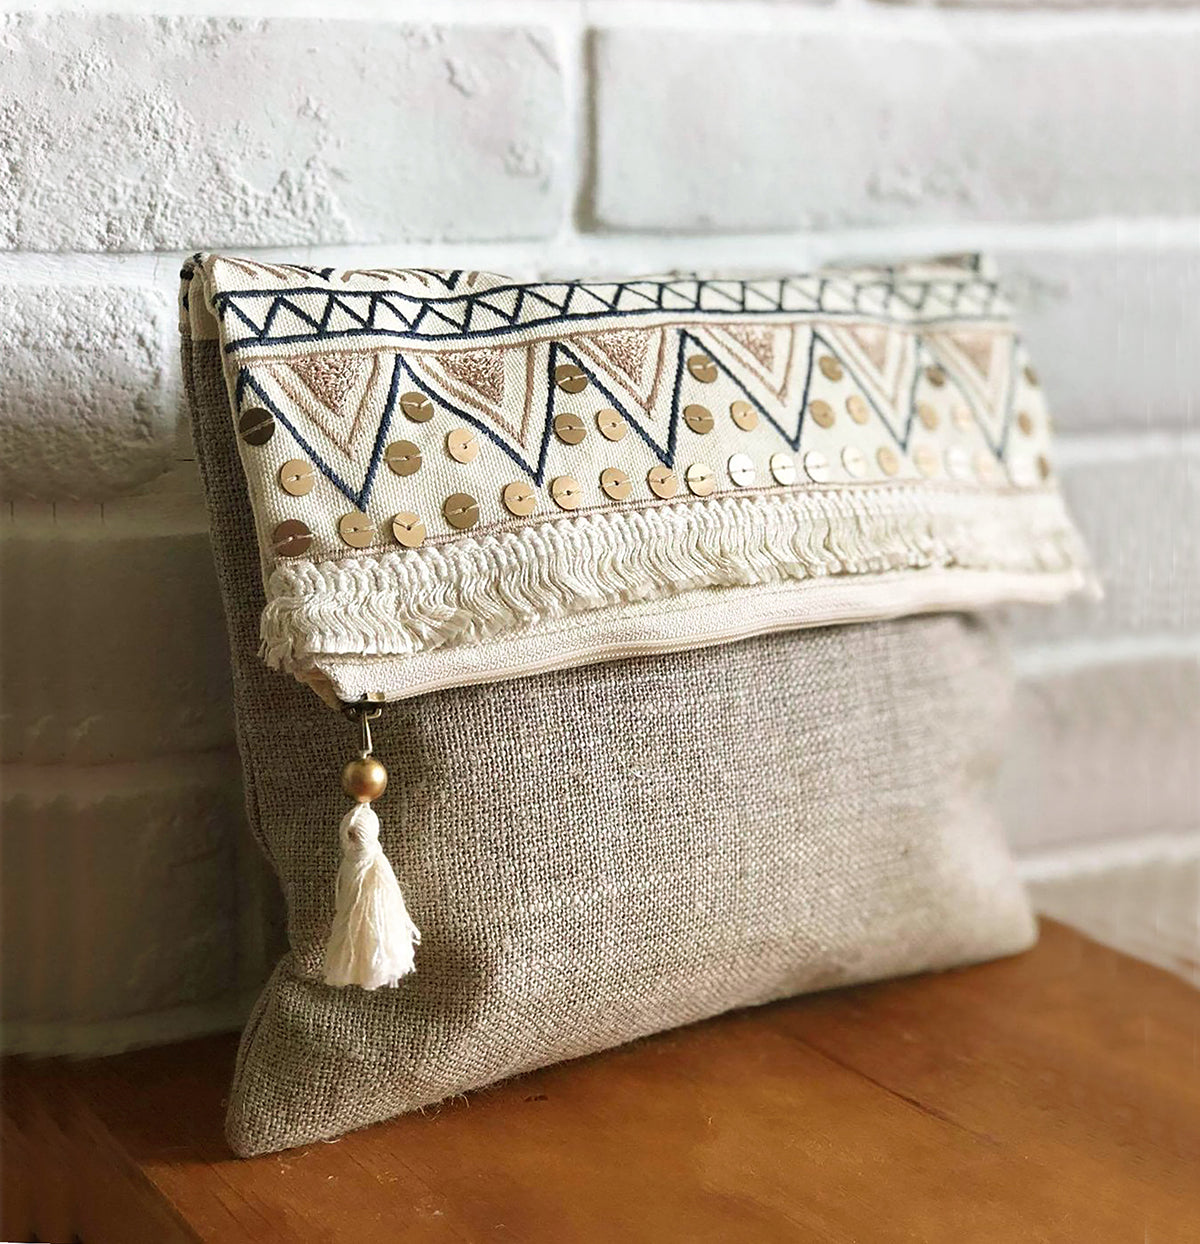 Boho pouch, moroccan, natural colour linen bag, foldover embroidered clutch